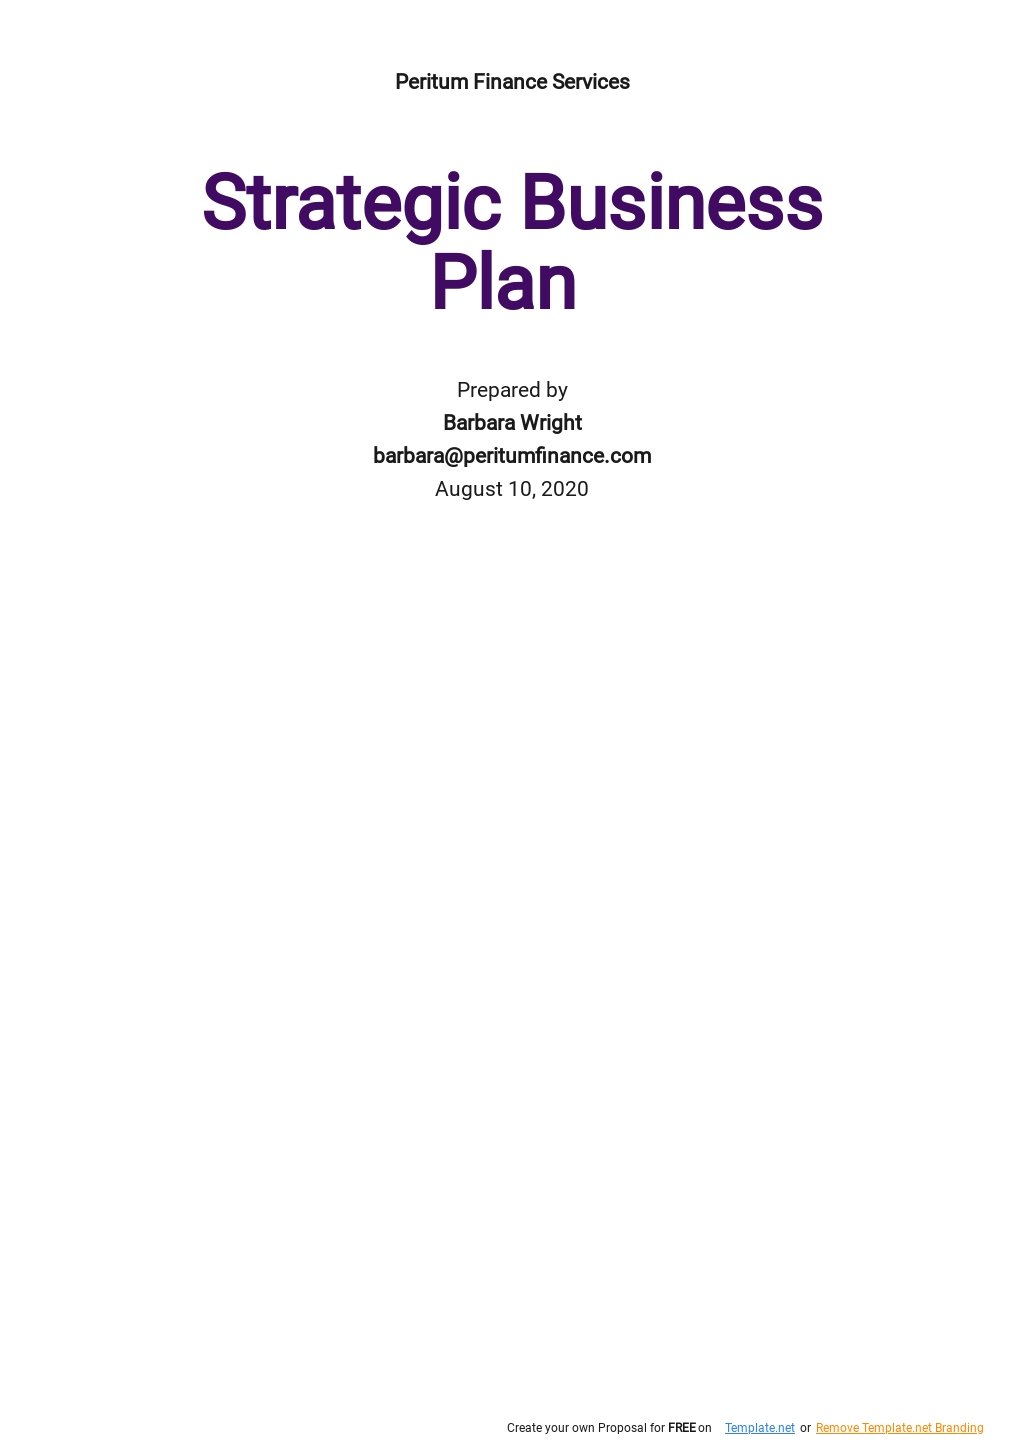 5 year strategic business plan template